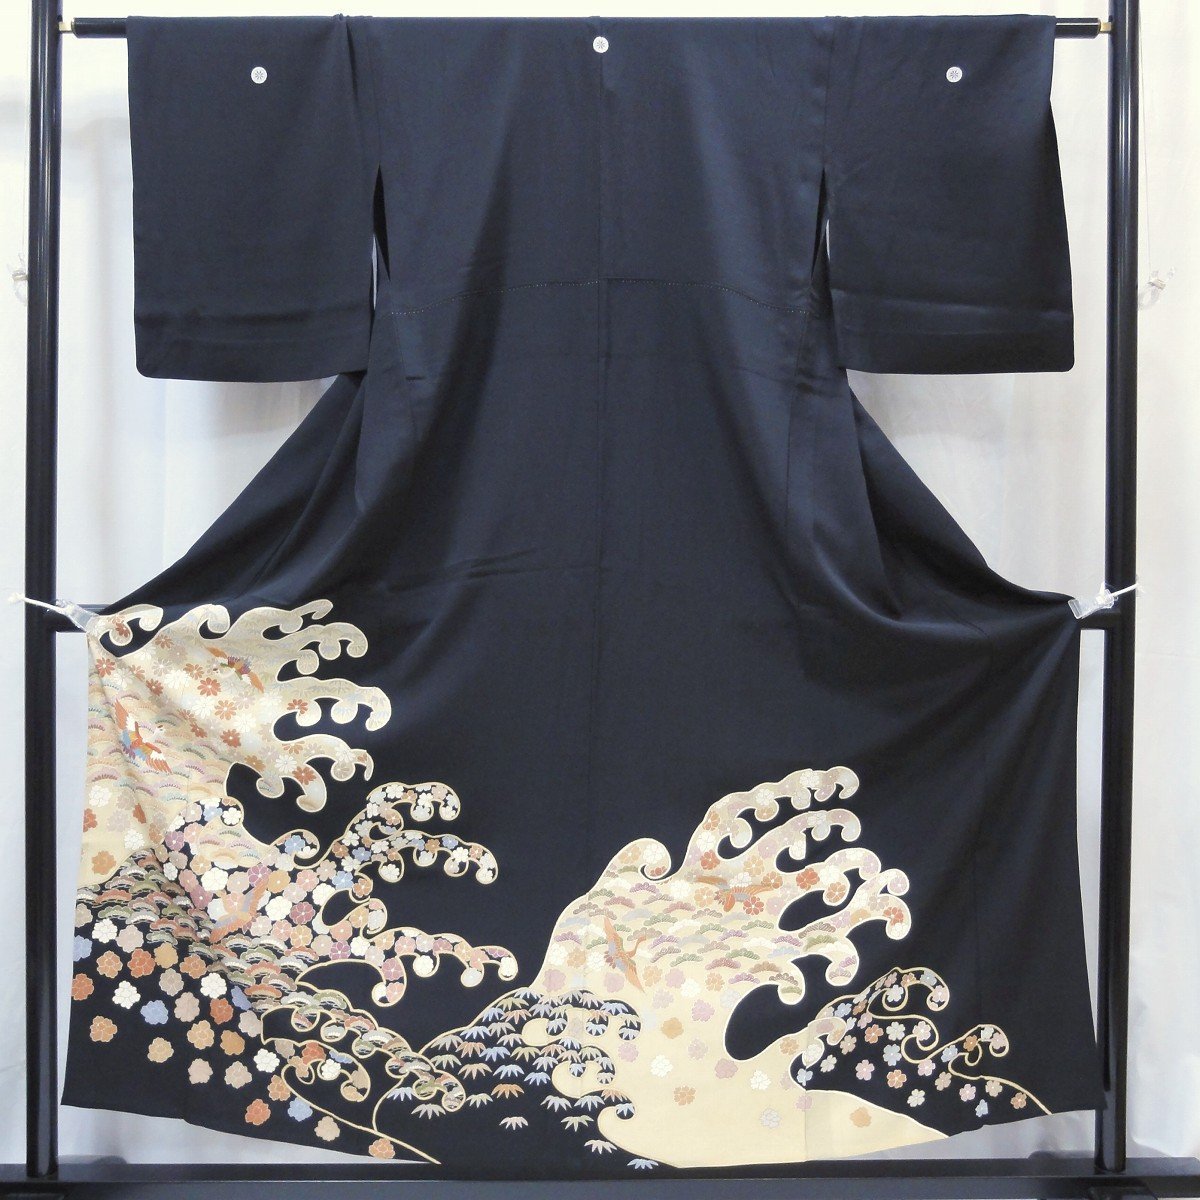 着物・黒留袖・松竹・花・鶴・単衣・正絹・No.200701-0090・梱包サイズ80